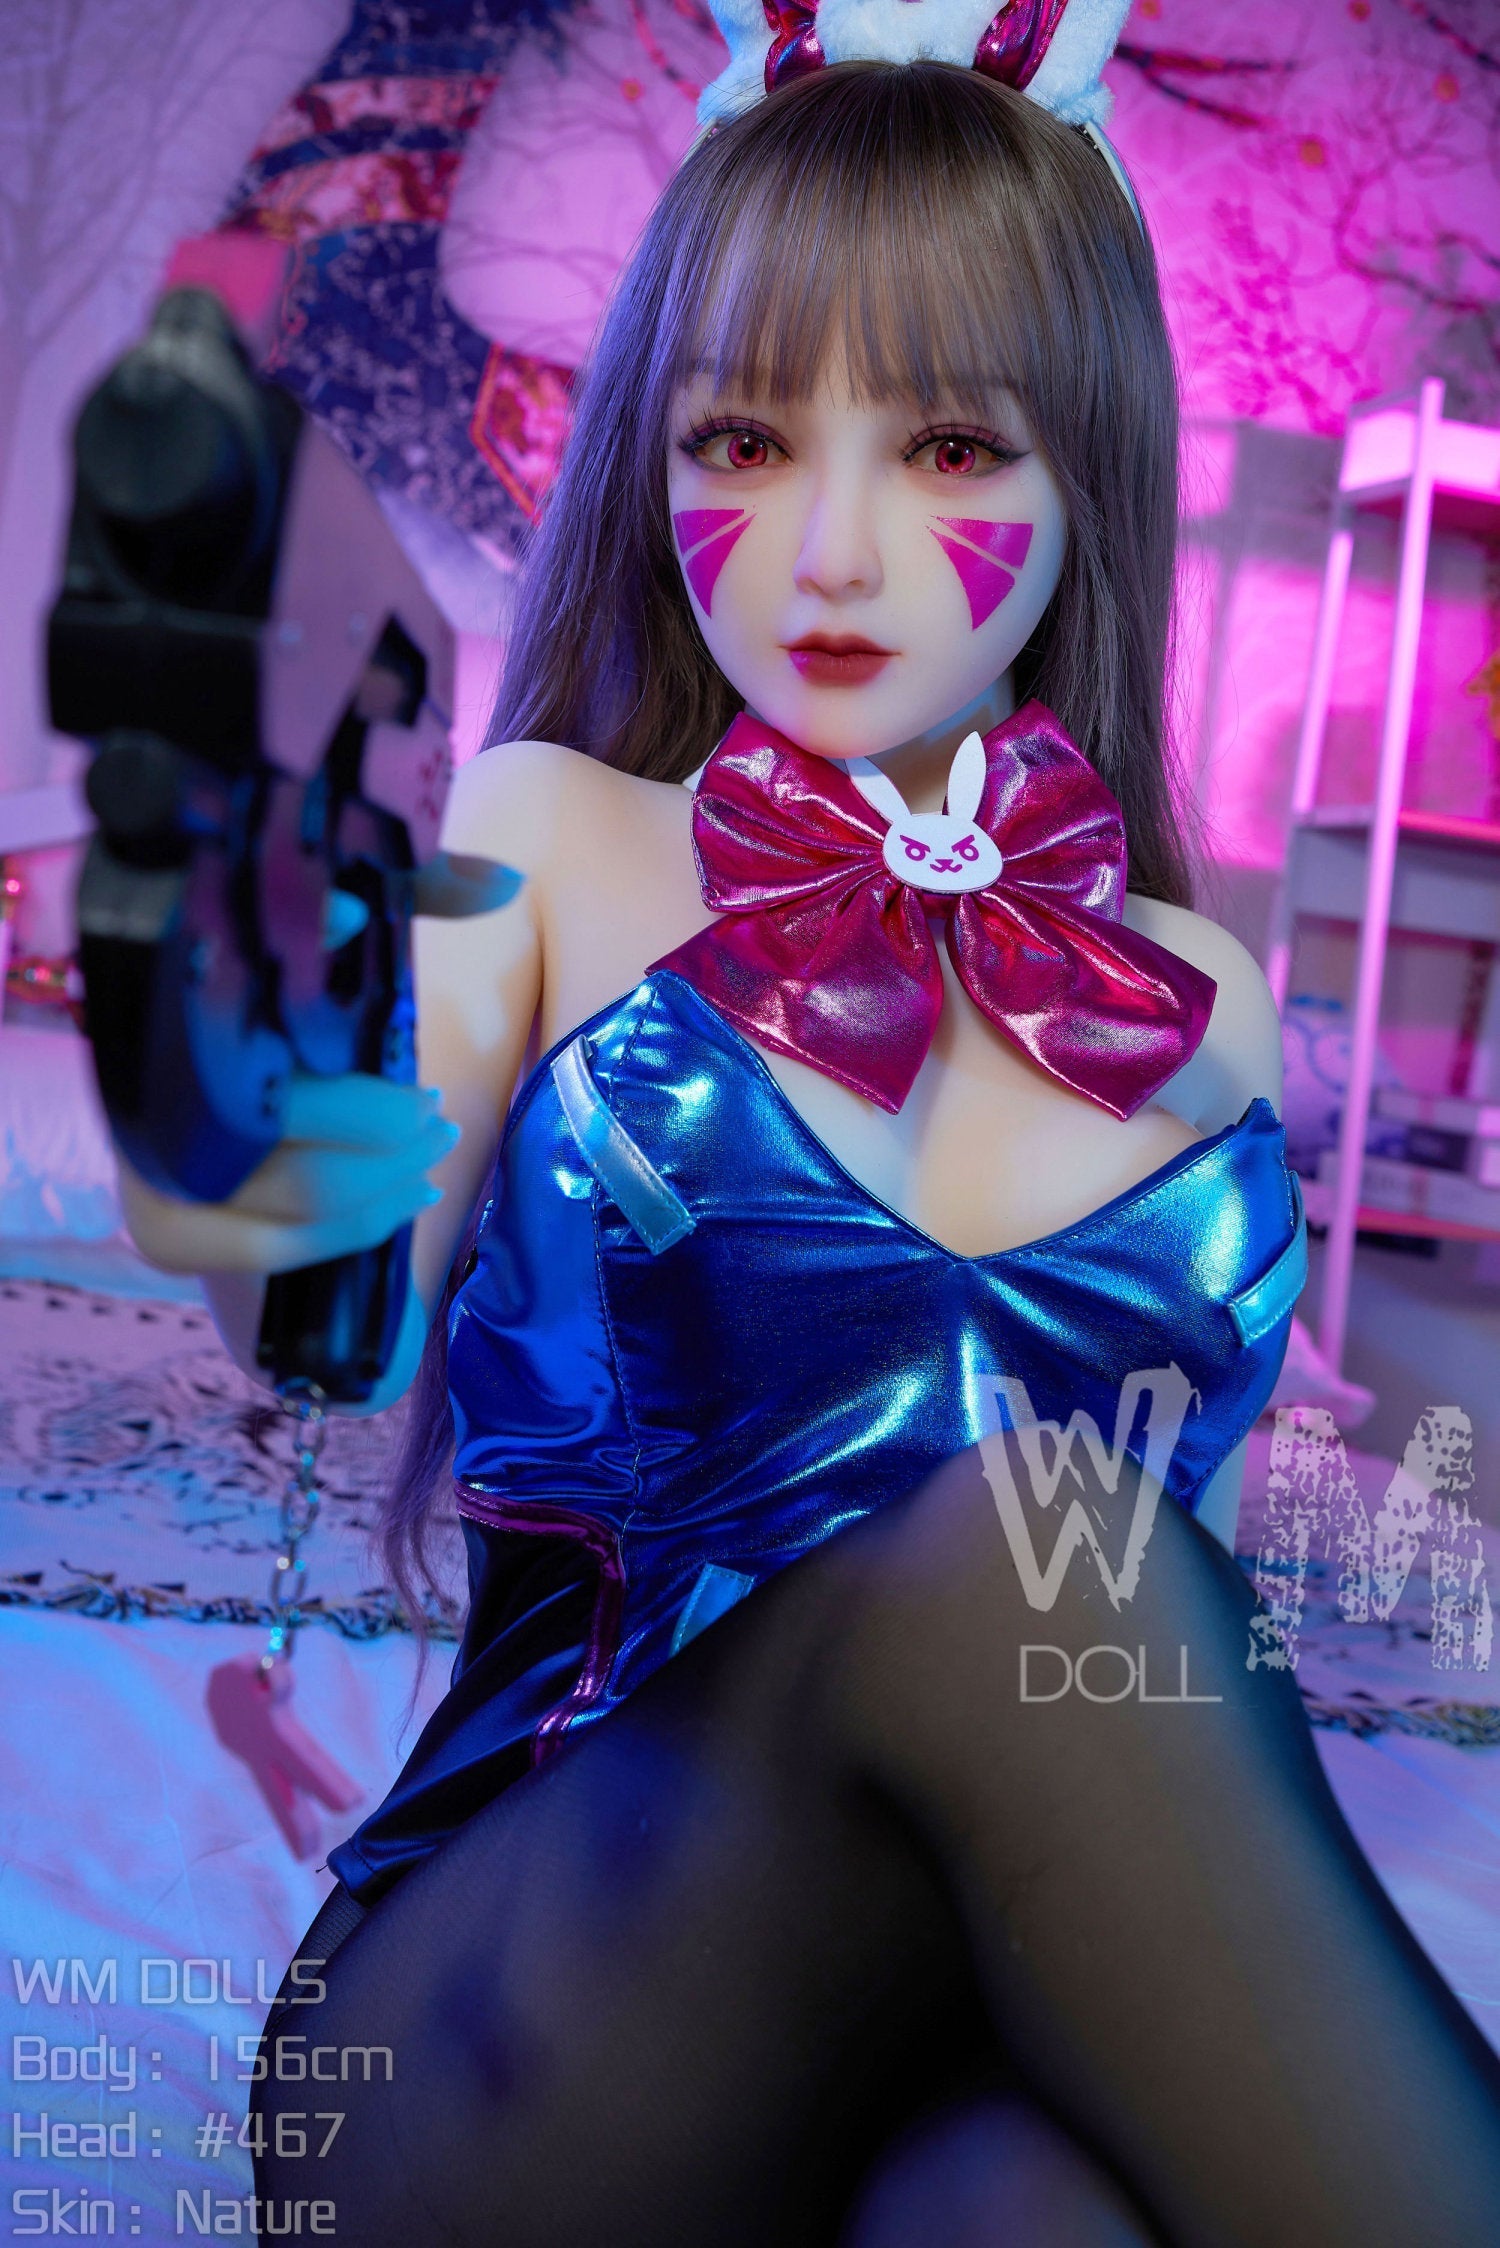 WM Doll 156 cm C TPE - Rose | Sex Dolls SG